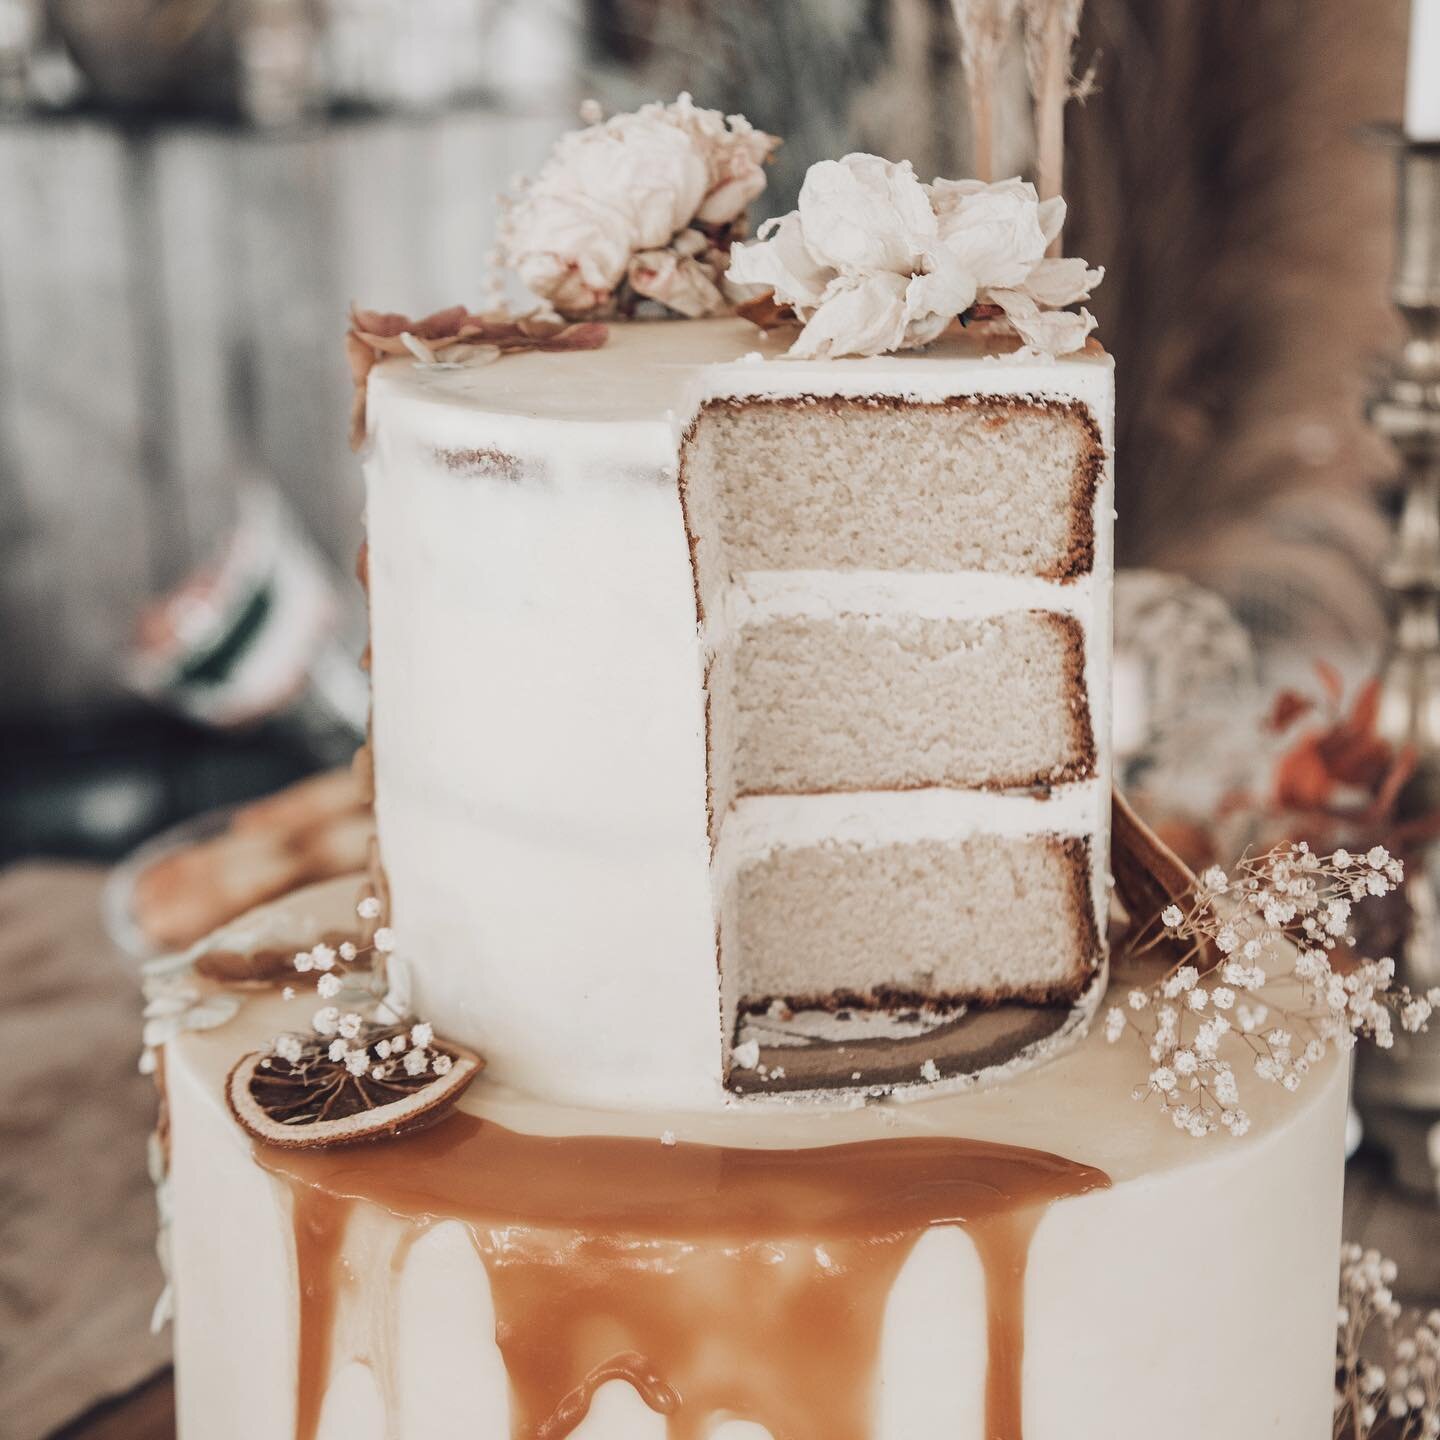 Close up of the wedding cake 🎂